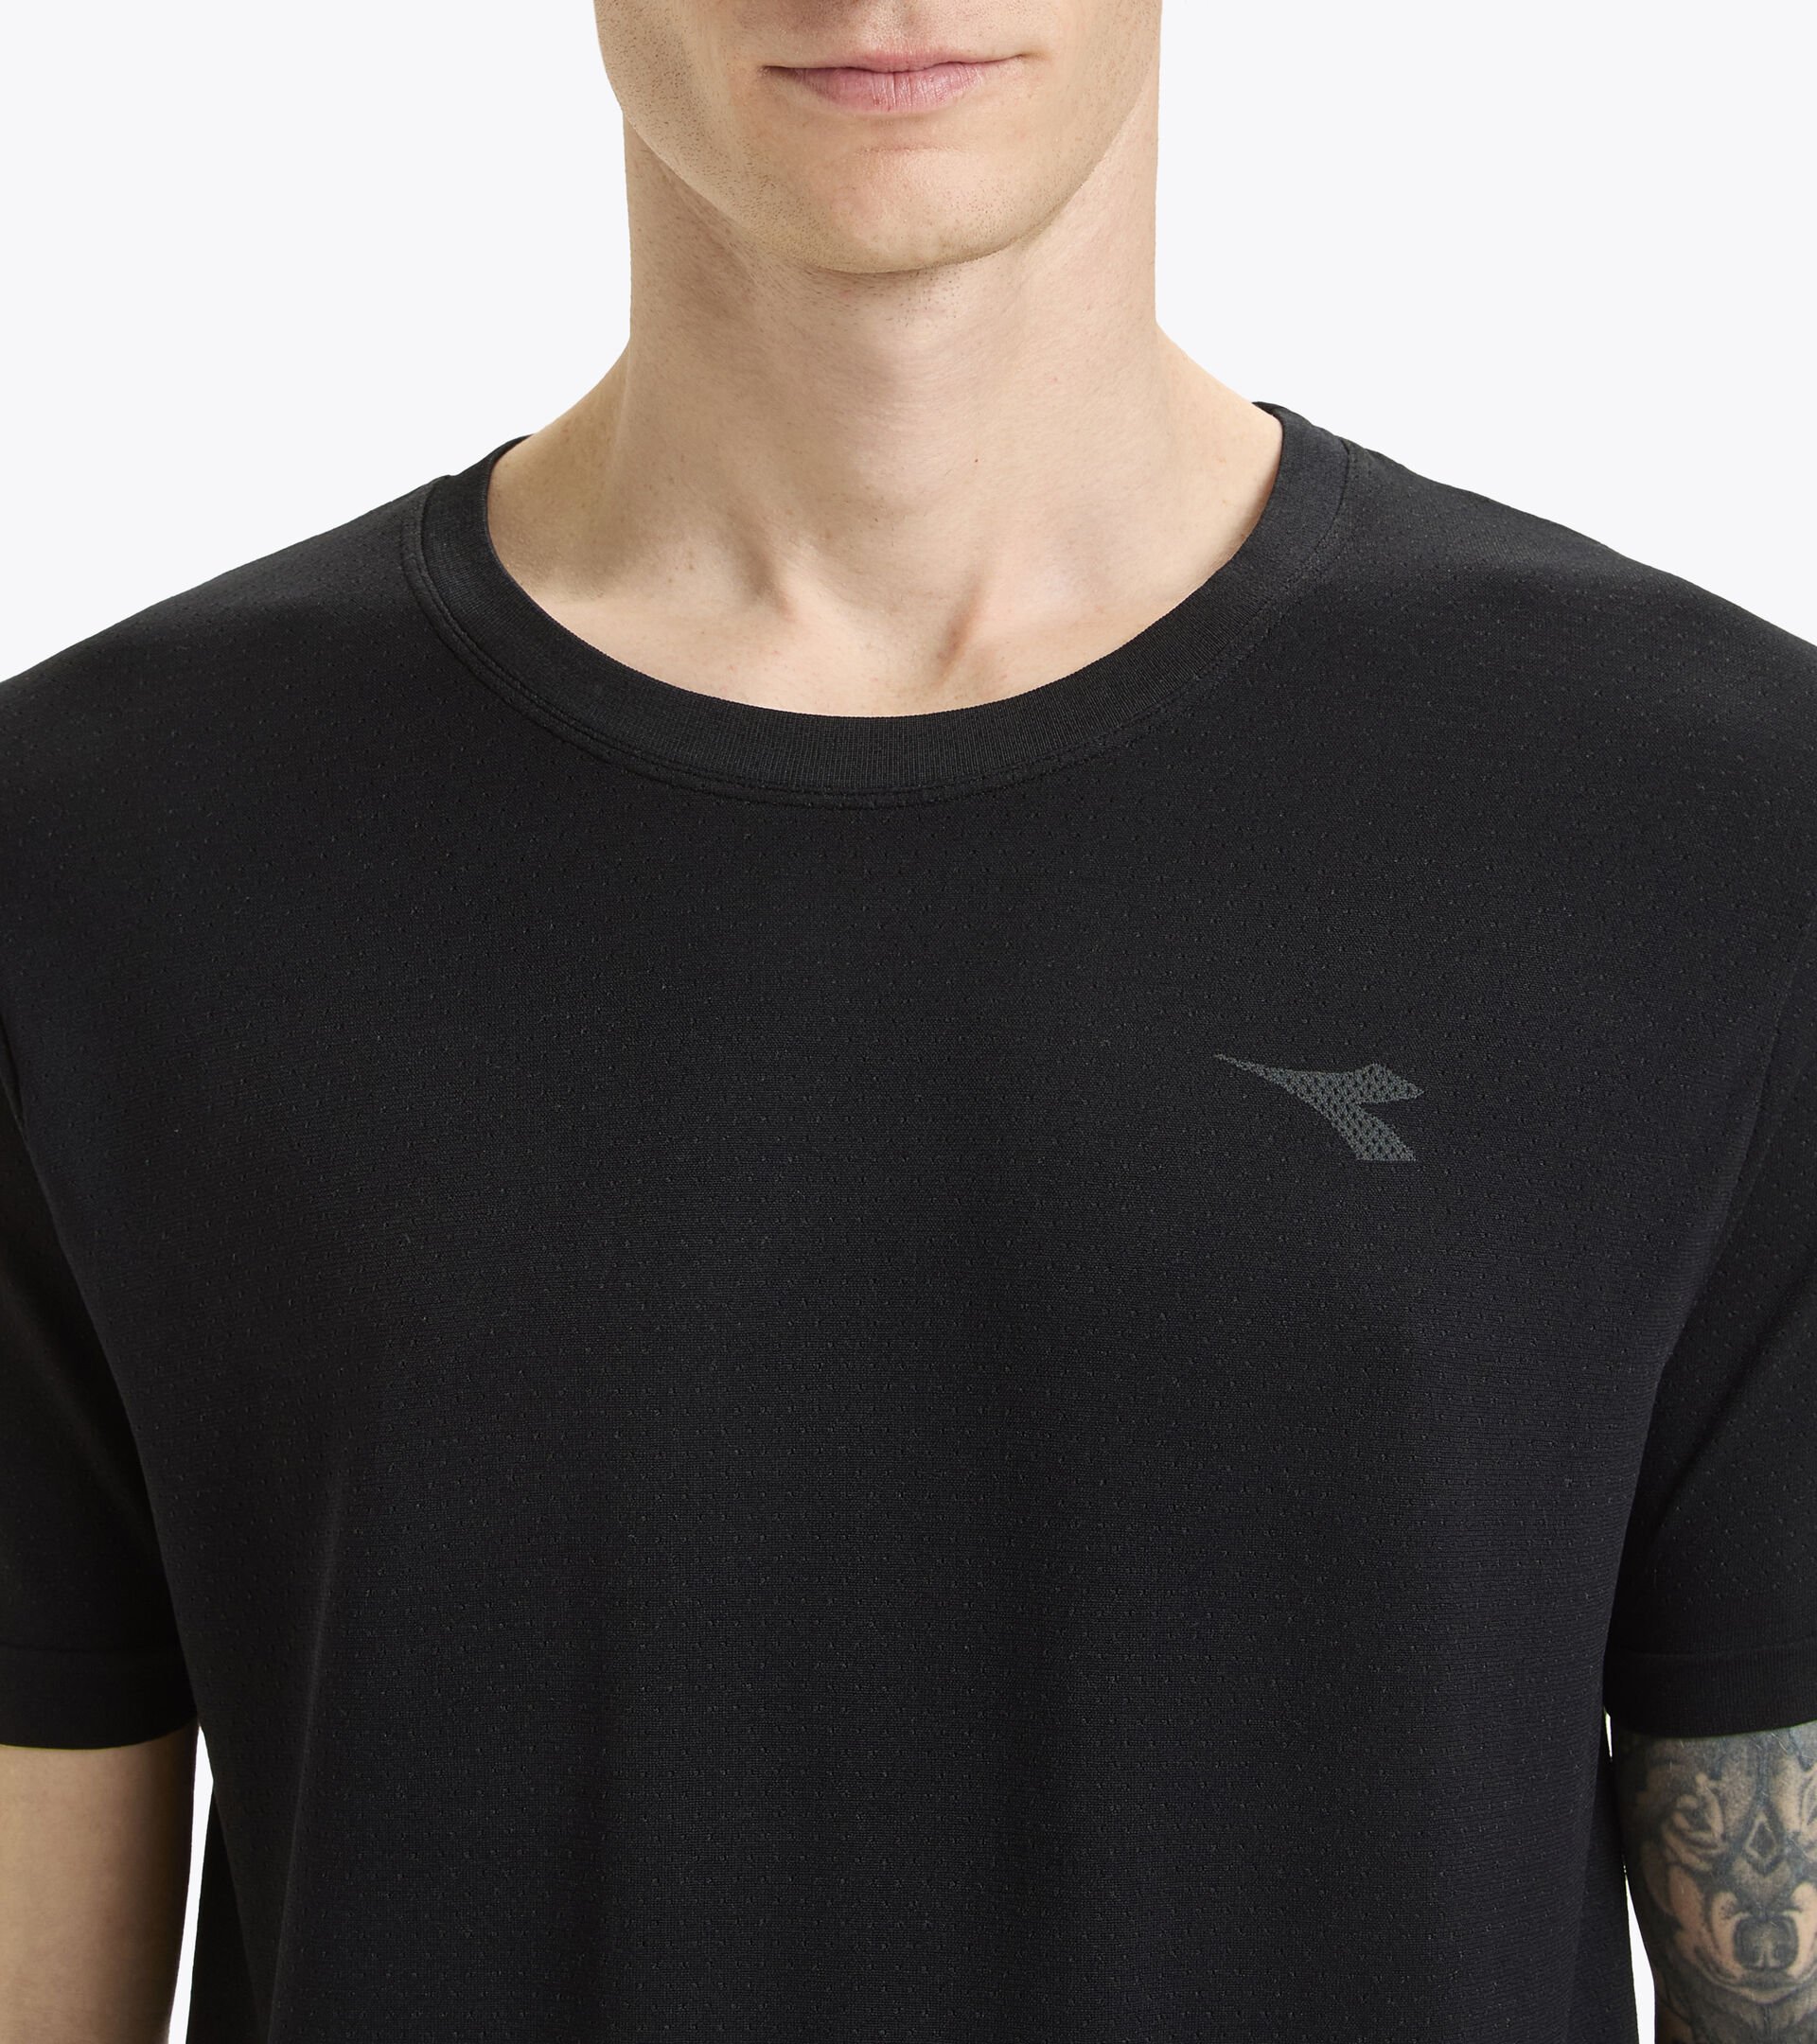 Camiseta de running sin costuras - Made in Italy - Hombre SS T-SHIRT SKIN FRIENDLY NEGRO - Diadora